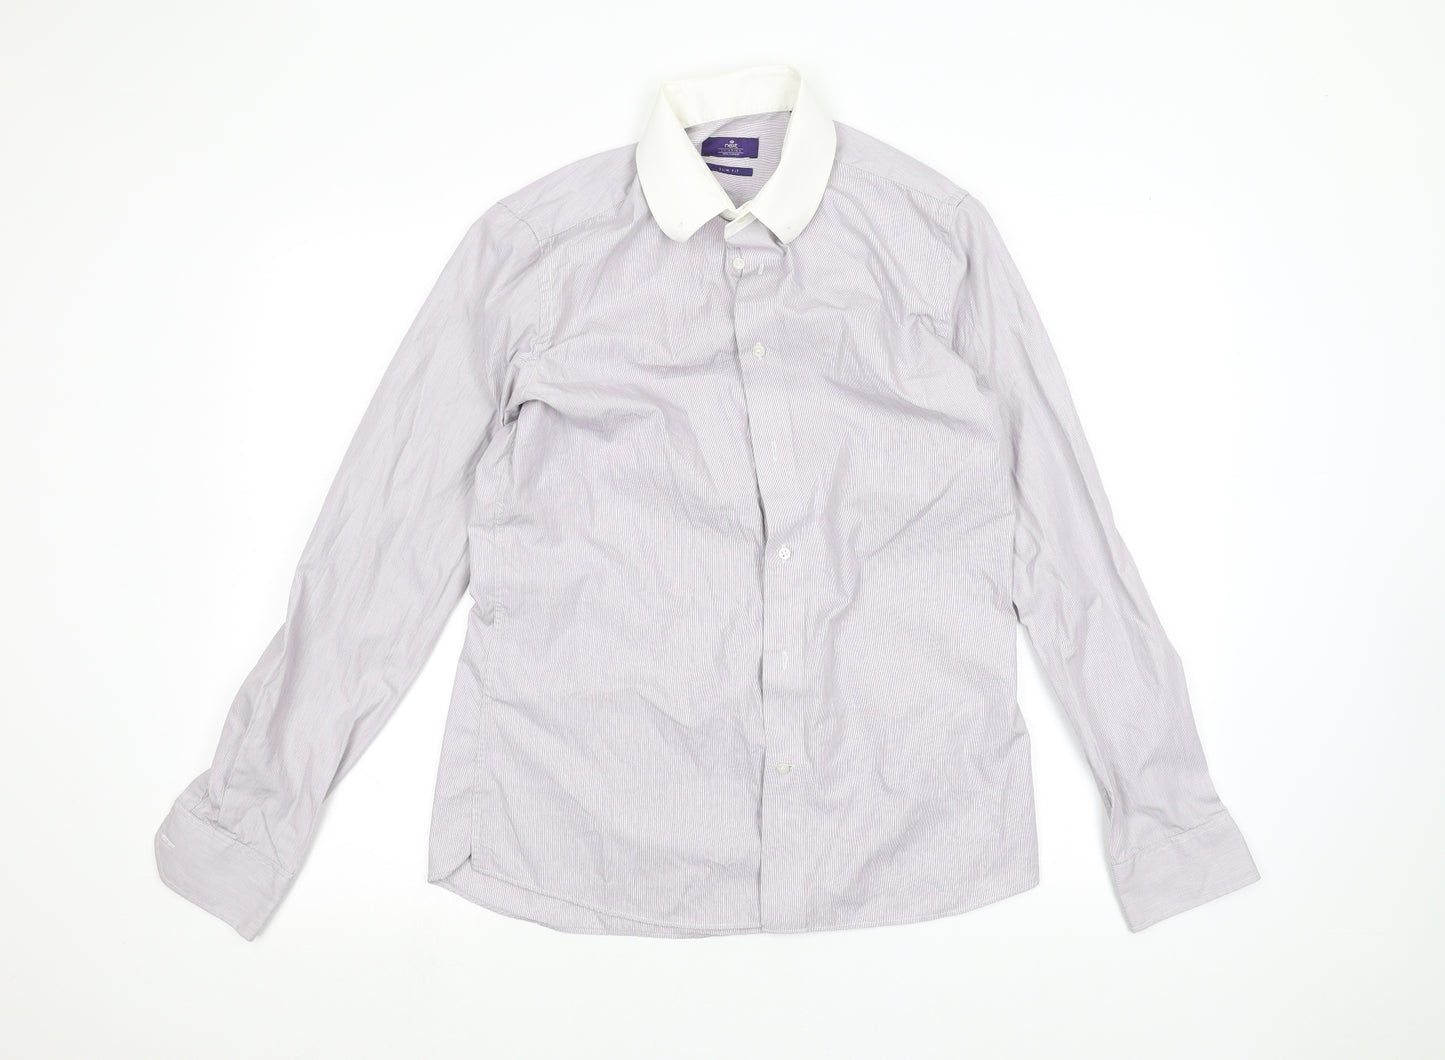 NEXT Mens Purple    Dress Shirt Size 15.5